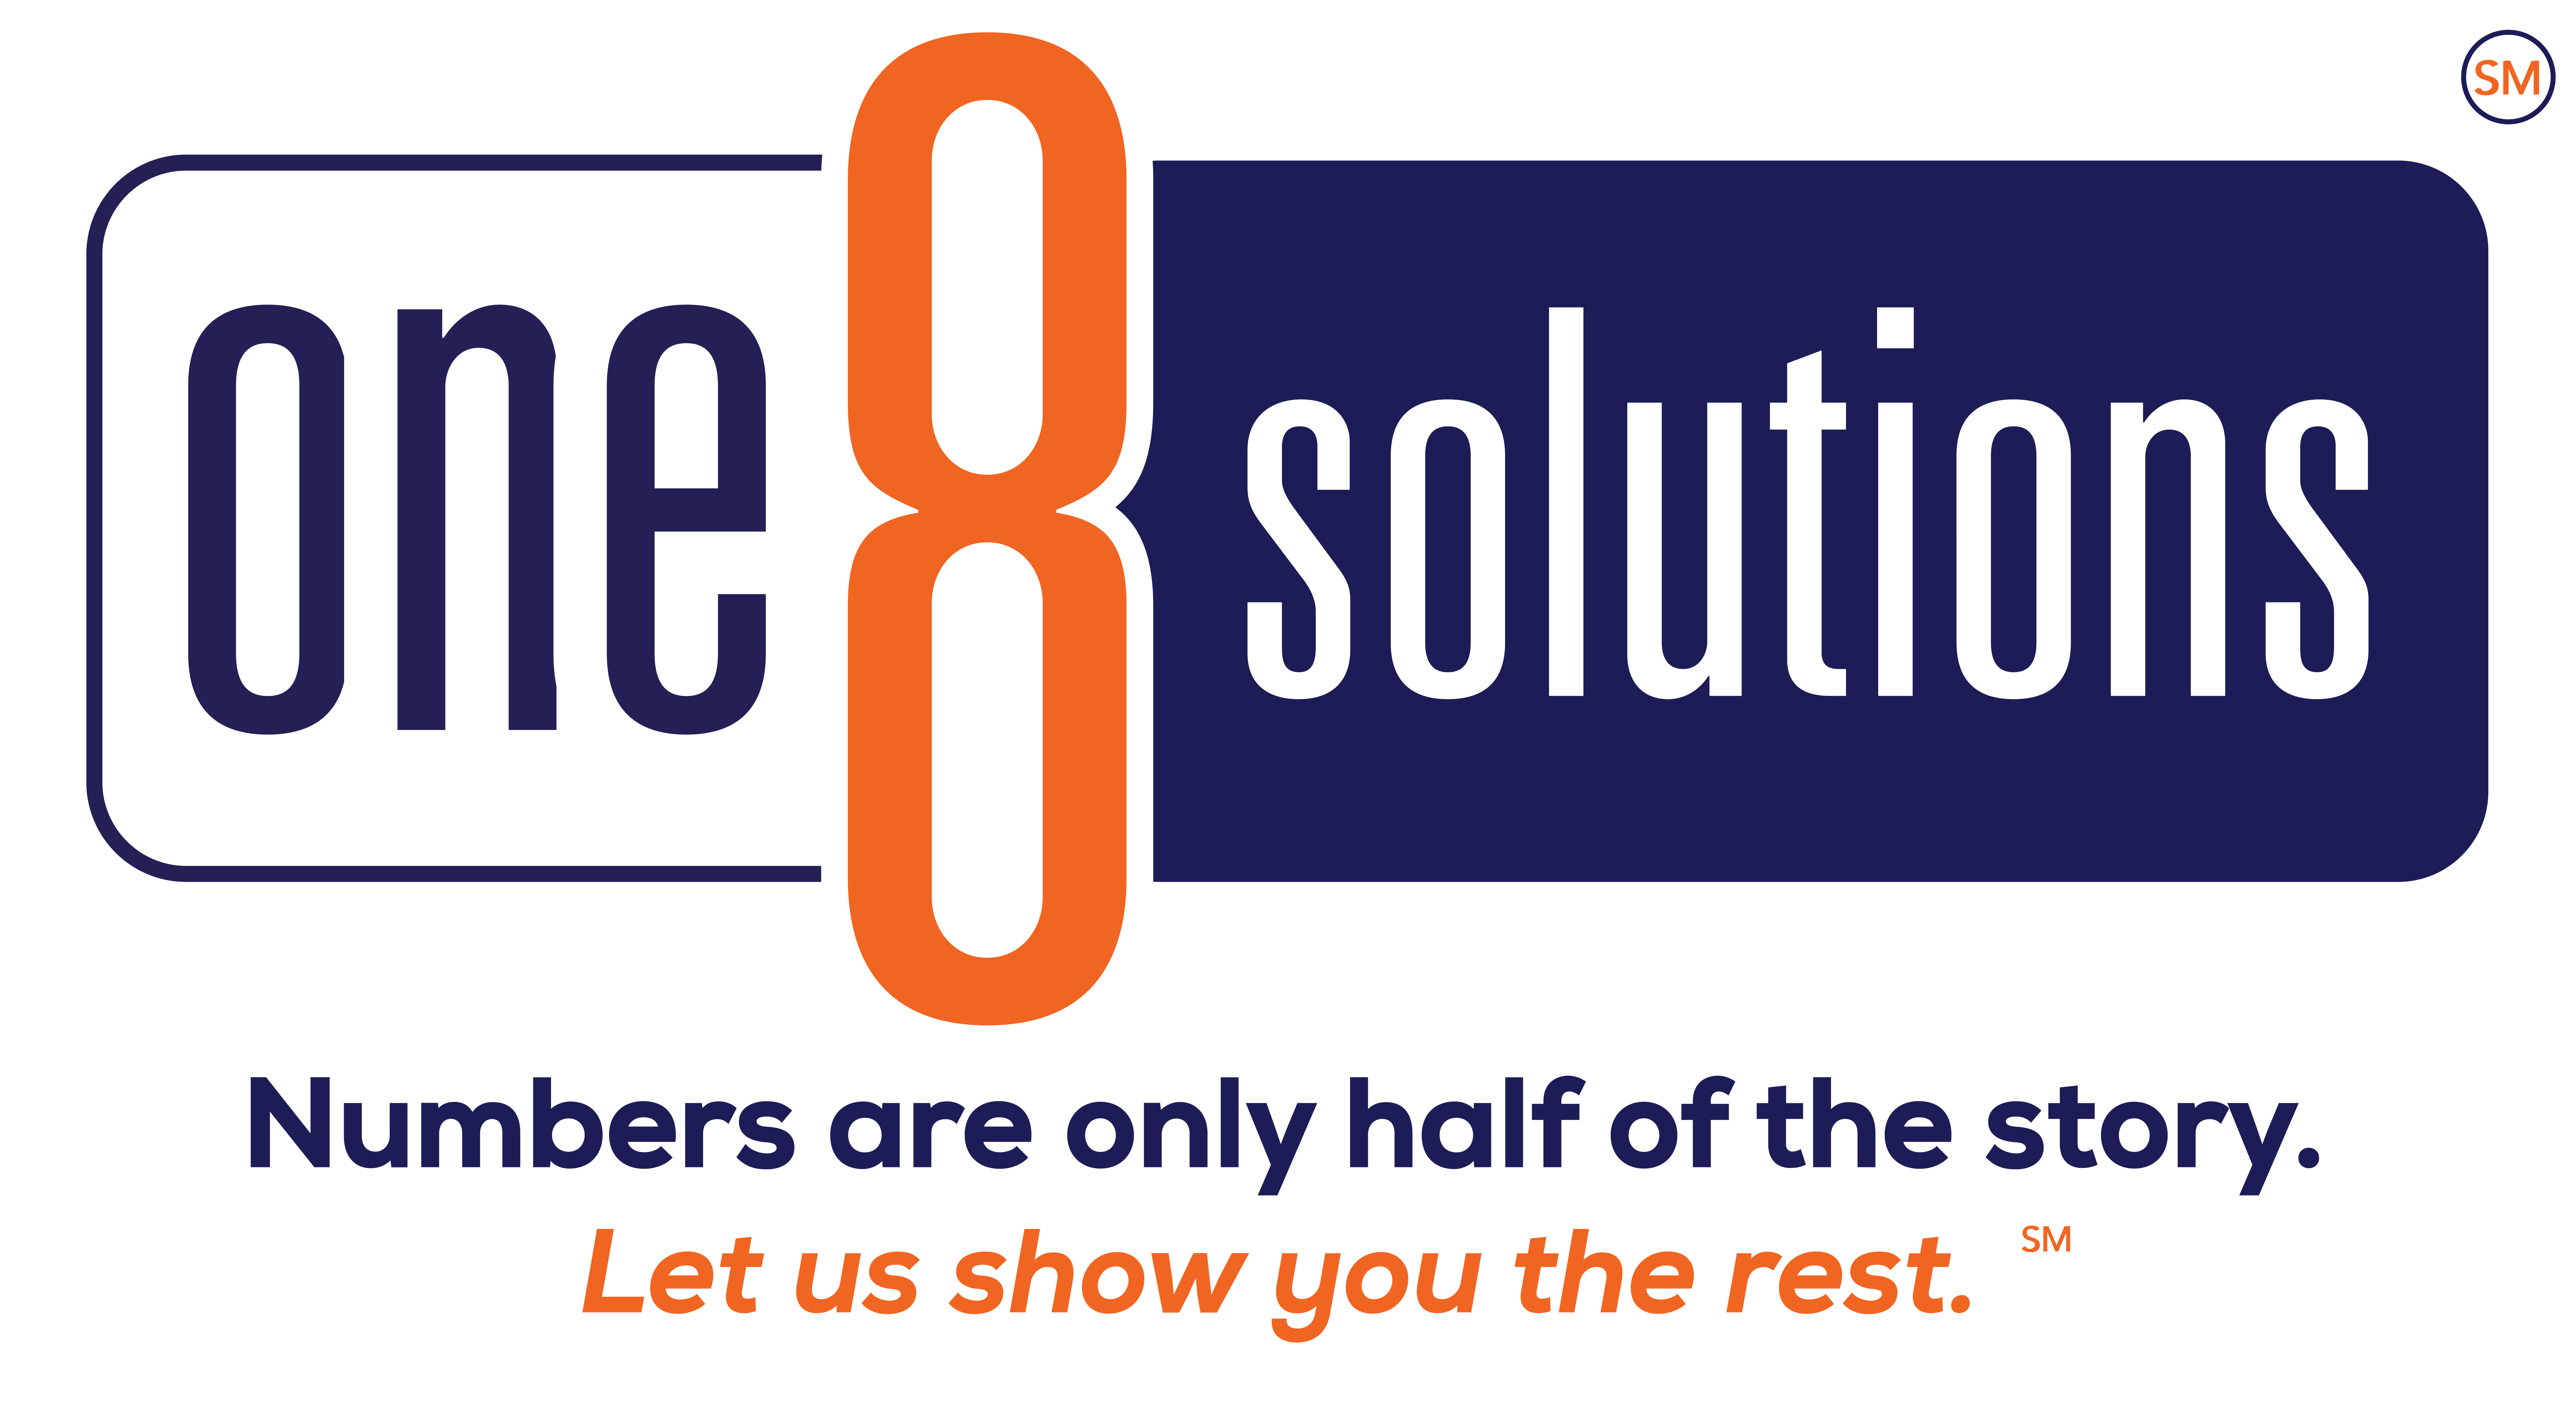 One 8 Solutions, LLC